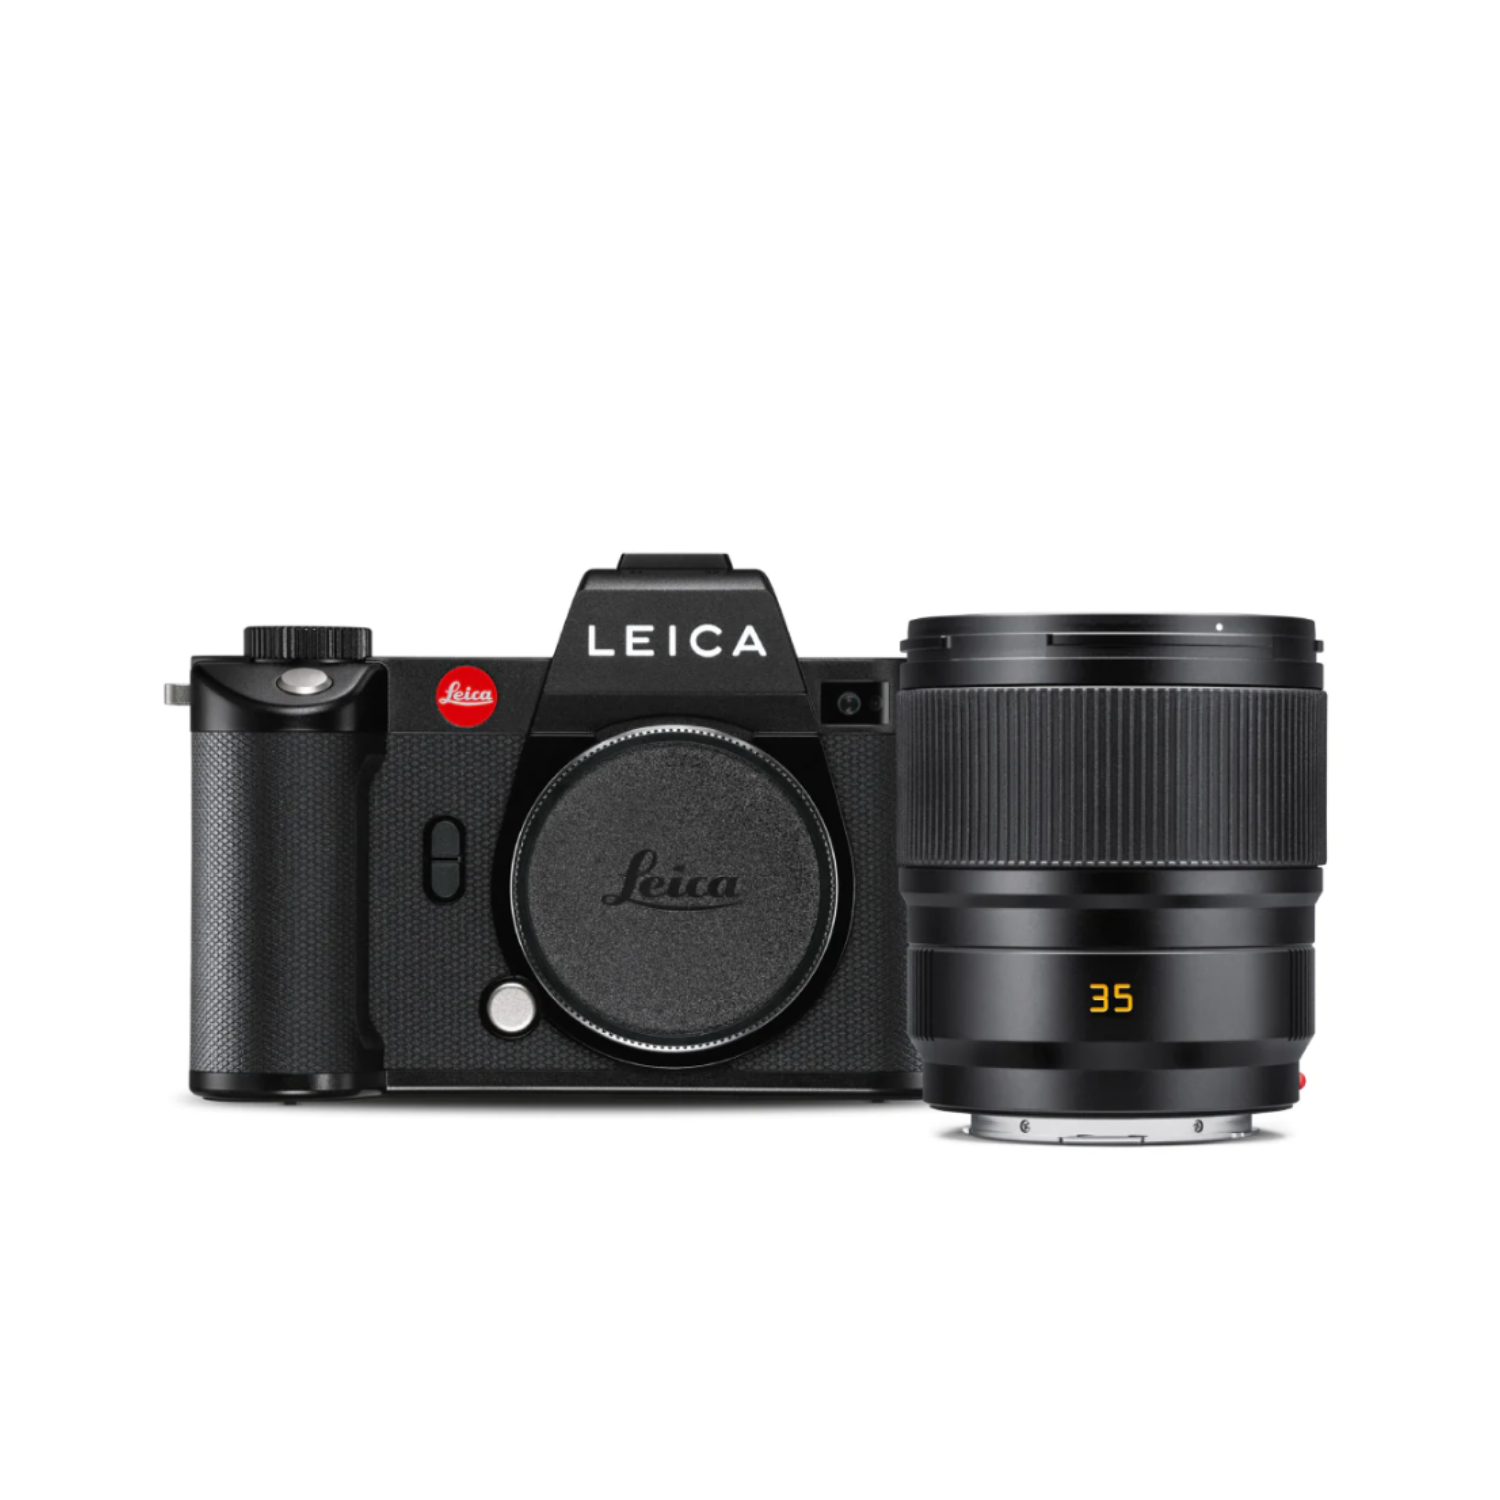 Leica SL2 With Summicron-SL 35mm F/2 ASPH. Lens Kit